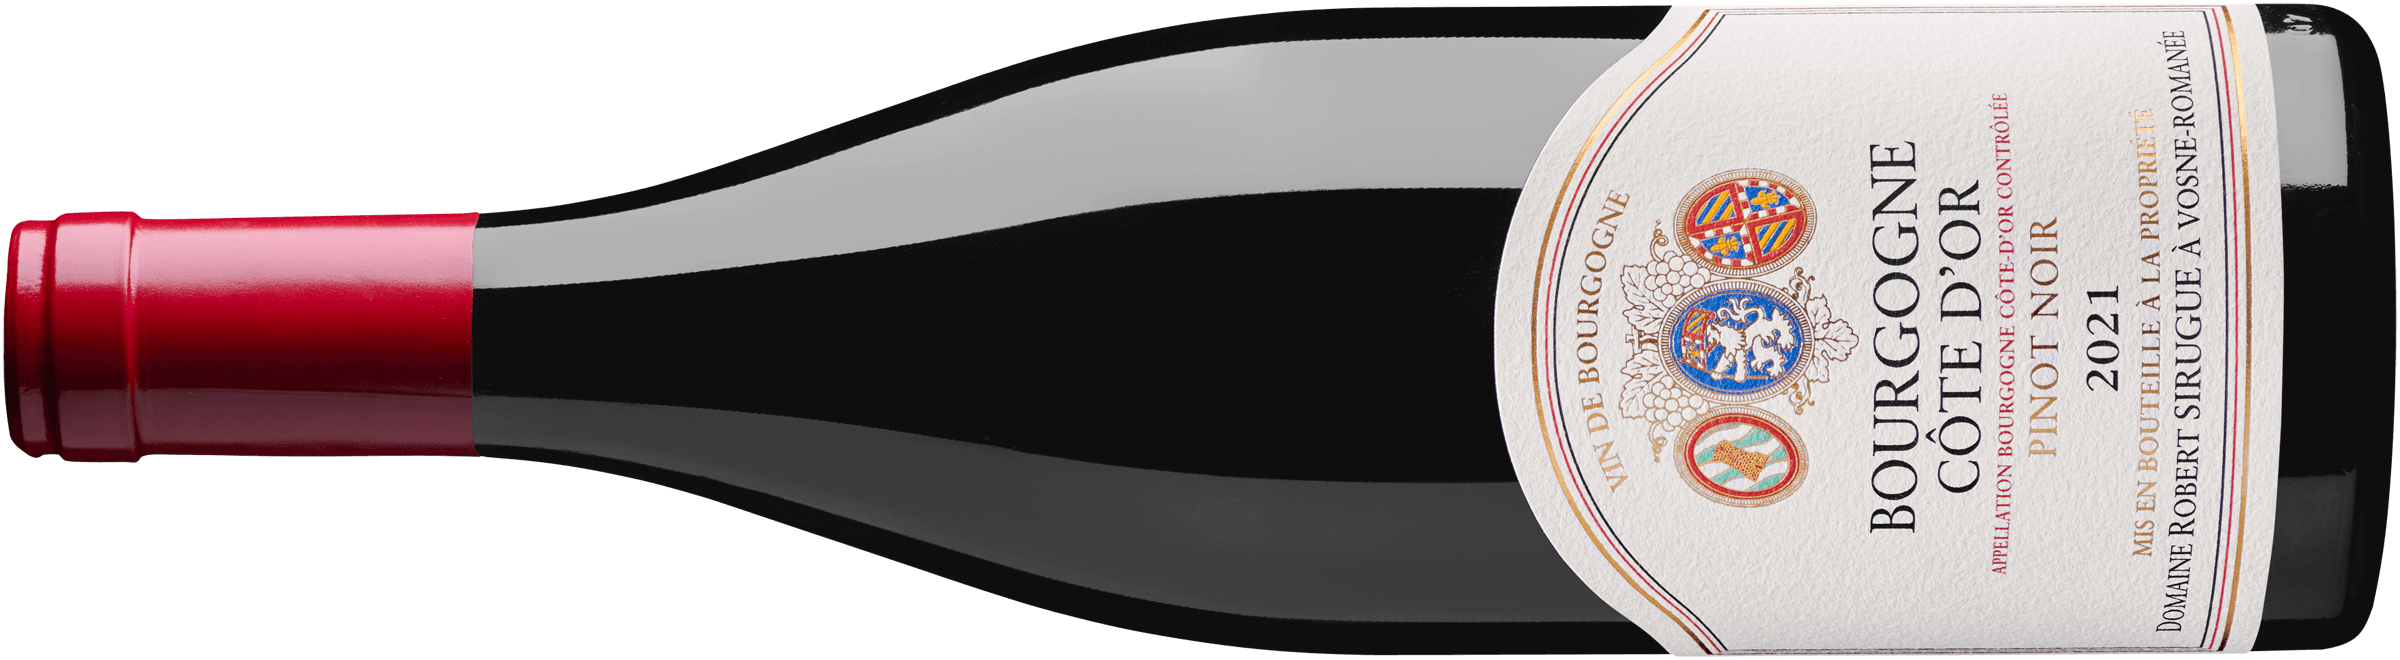 Bourgogne Côte d'Or AOC Pinot Noir